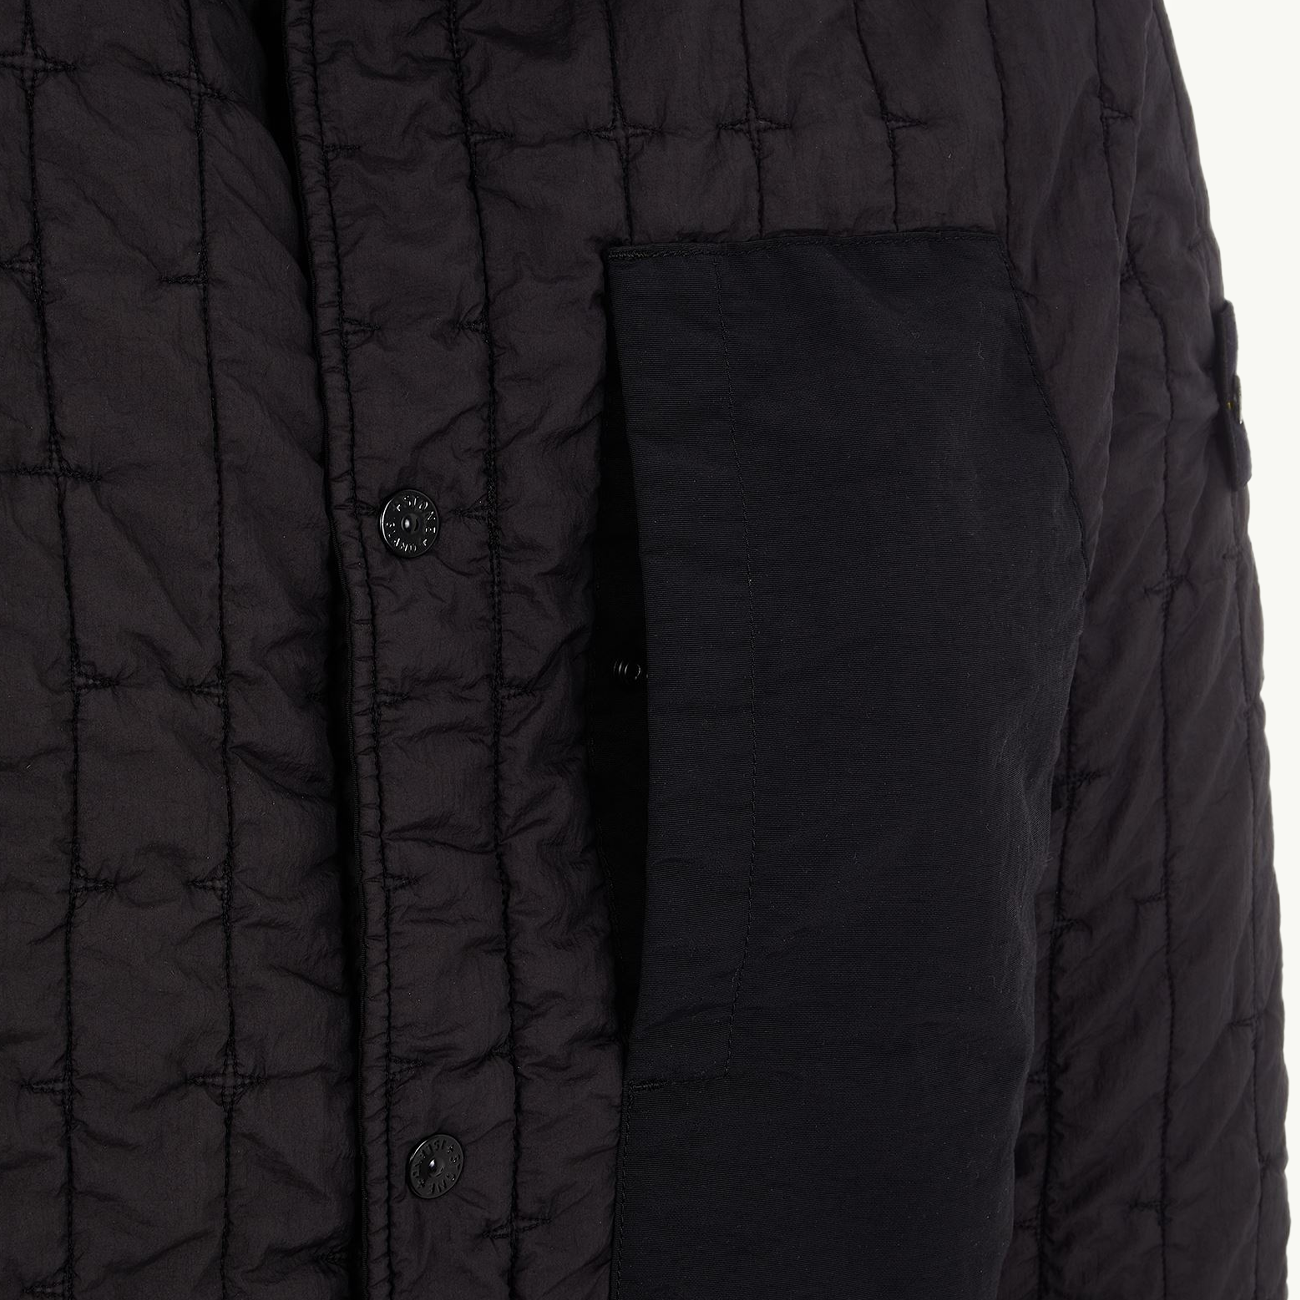 Jacket Patch Quilted Nylon Primaloft - Black 2980